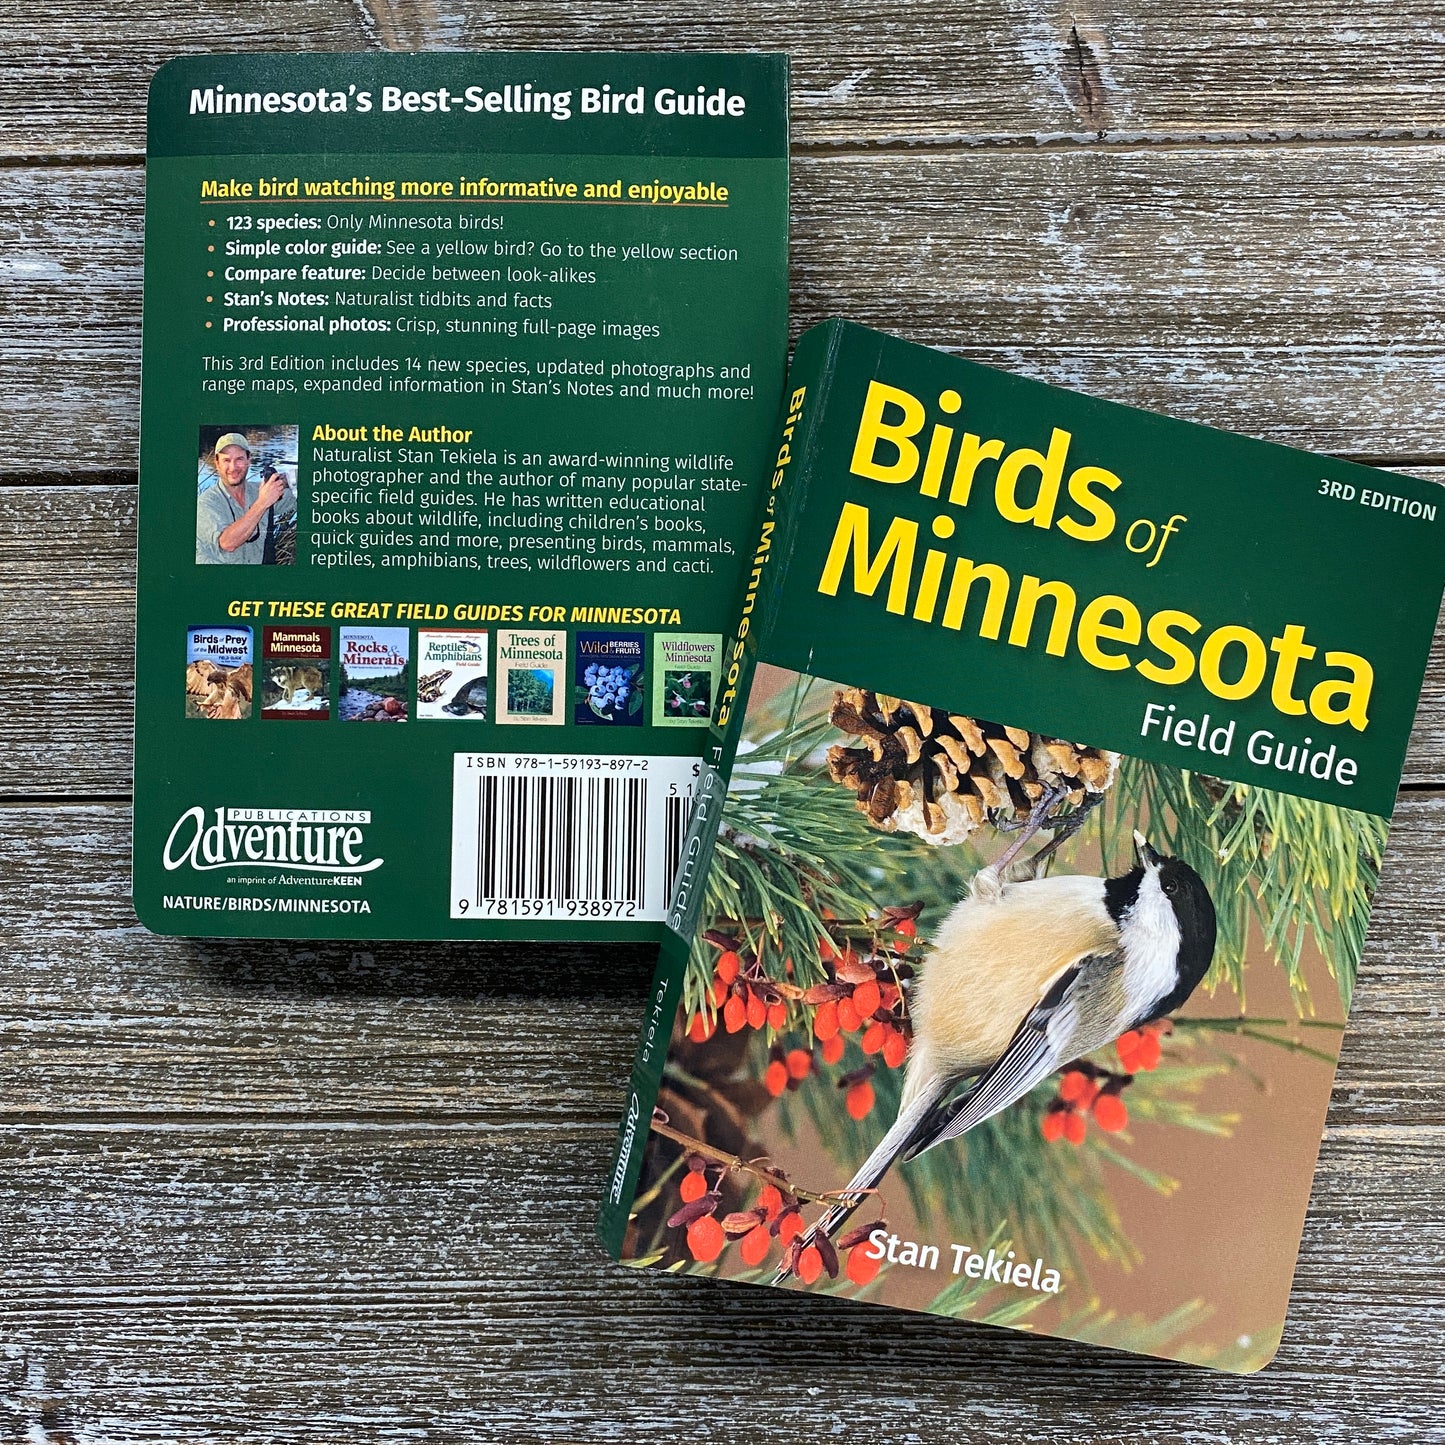 Book - Birds of Minnesota Field Guide 3rd Edition